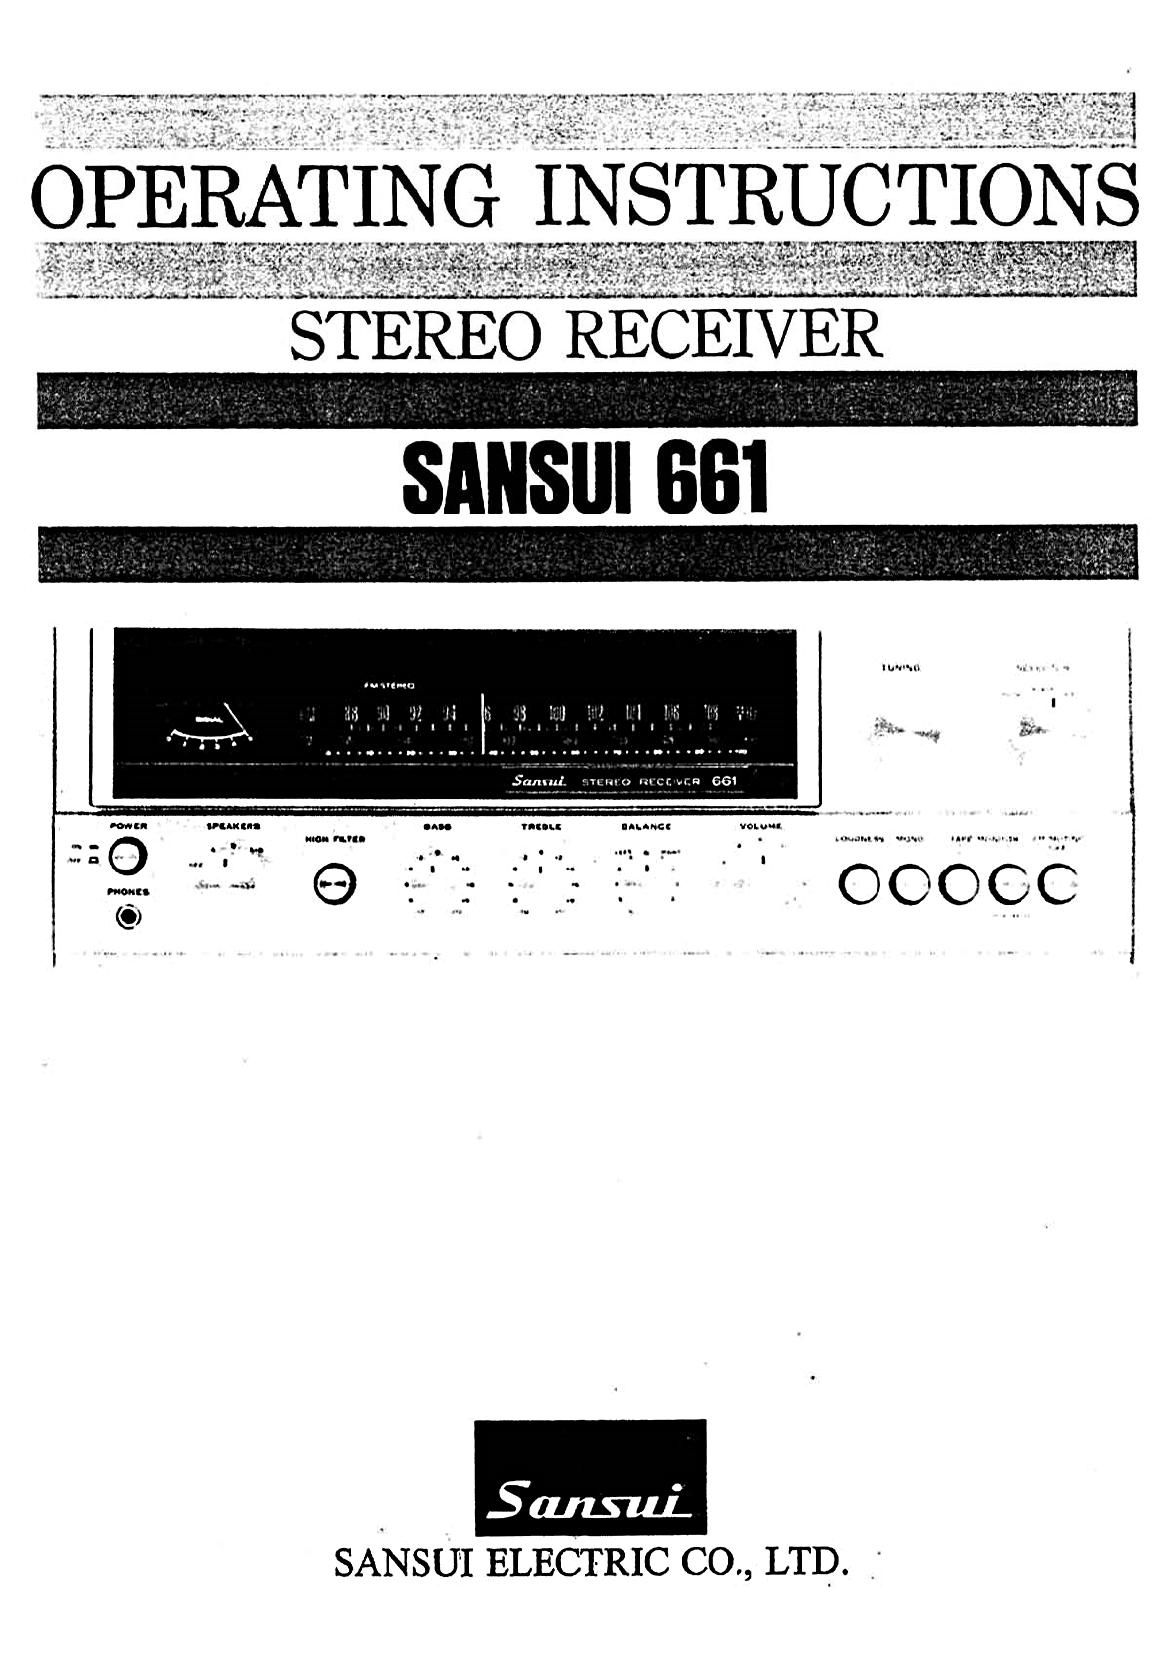 Sansui 661 Owners Manual